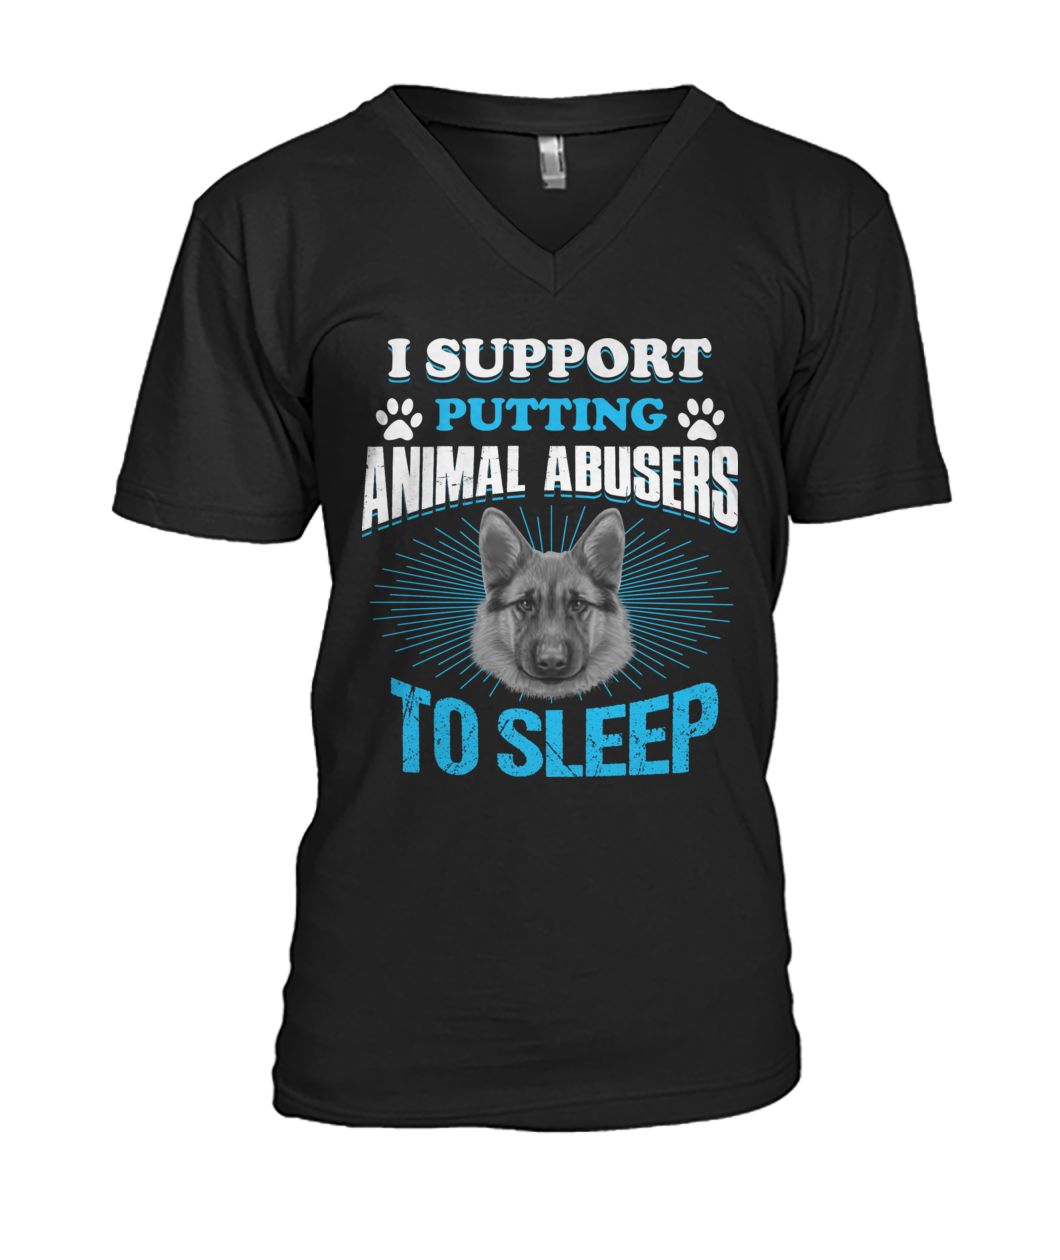 German shepherd I support putting animal abusers to sleep mens v-neck